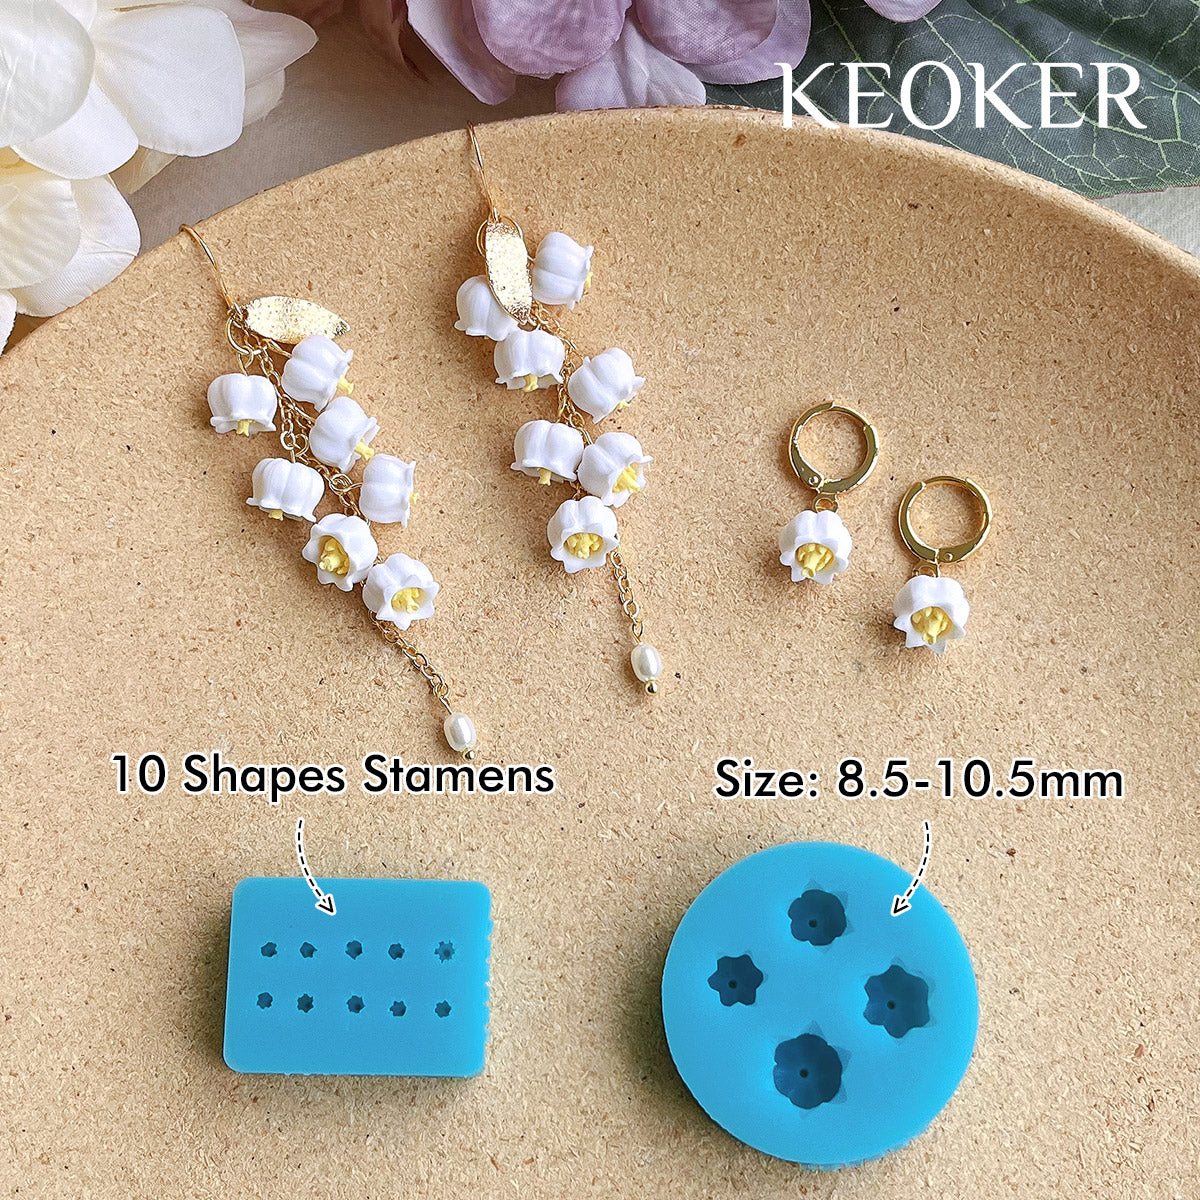 KEOKER Mini Lavender Polymer Clay Earrings Molds & Cutters